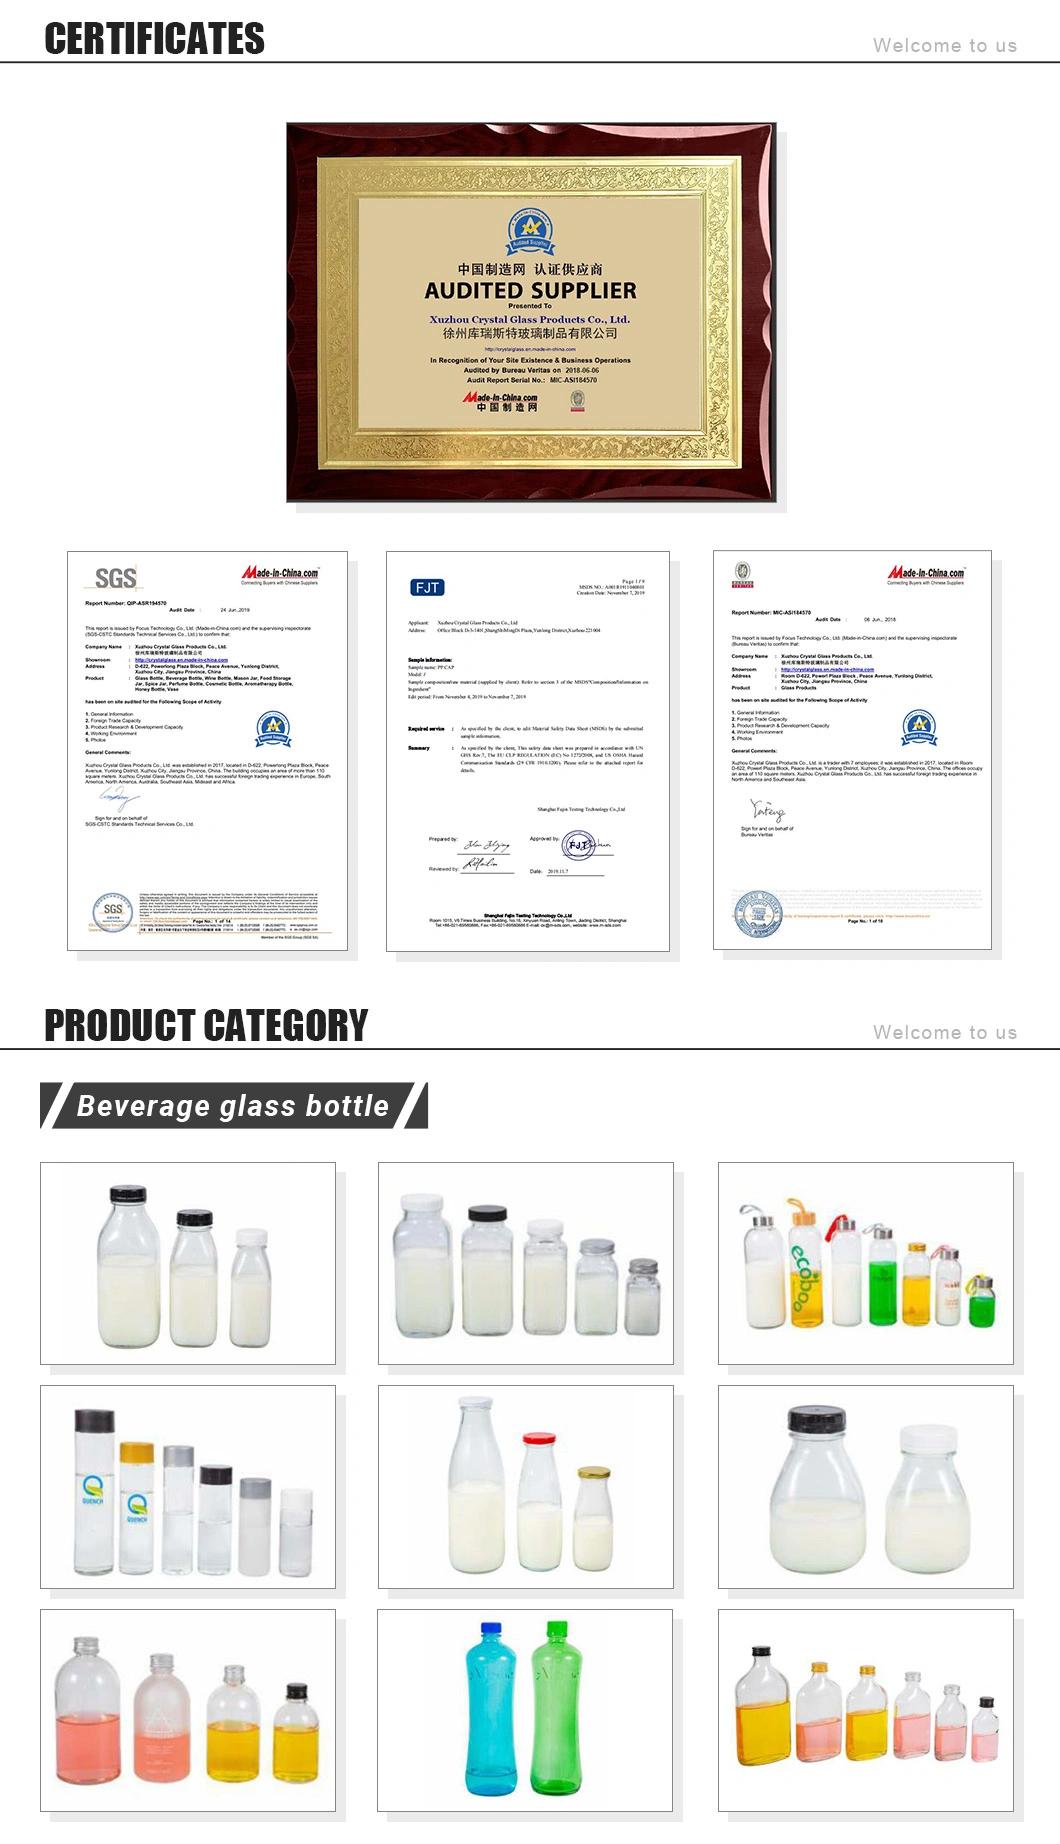 30ml 40ml 50ml 60ml 100ml 120ml Essential Oil Frost Cylender Serum Glass Dropper Bottle